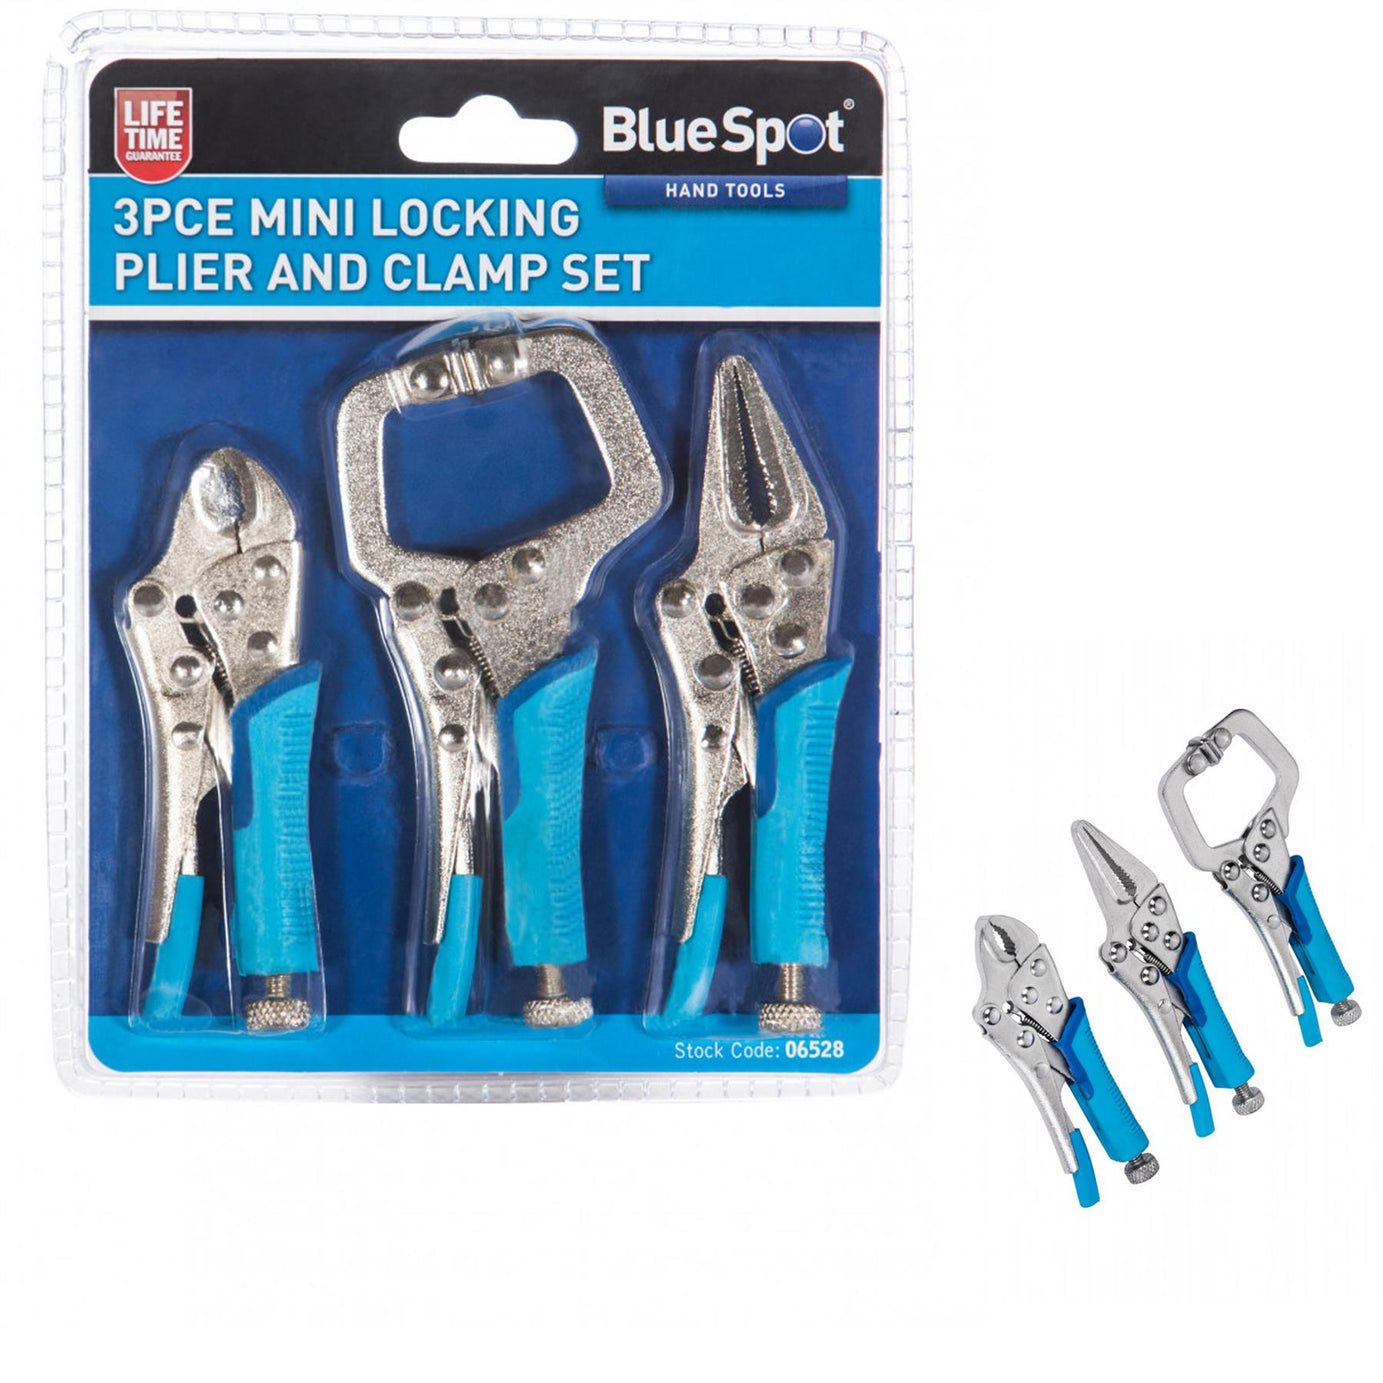 BlueSpot 3Pce Mini Locking Grip Plier And Clamp Set Professional Quality - Mole Grips